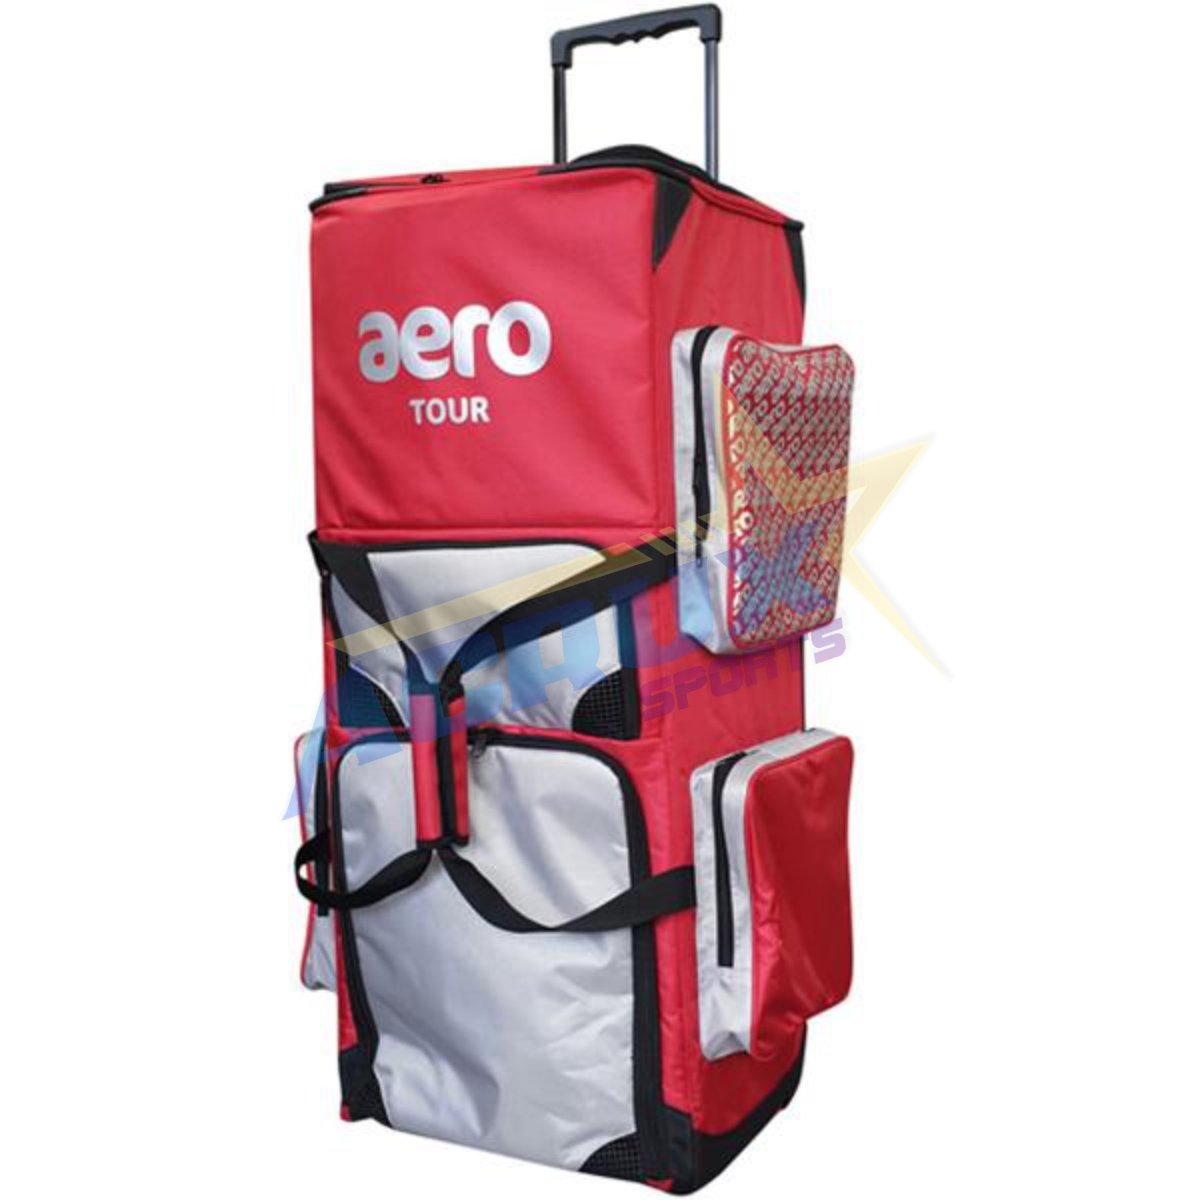 Aero Standup Tour Cricket Kit Bag with Wheels.